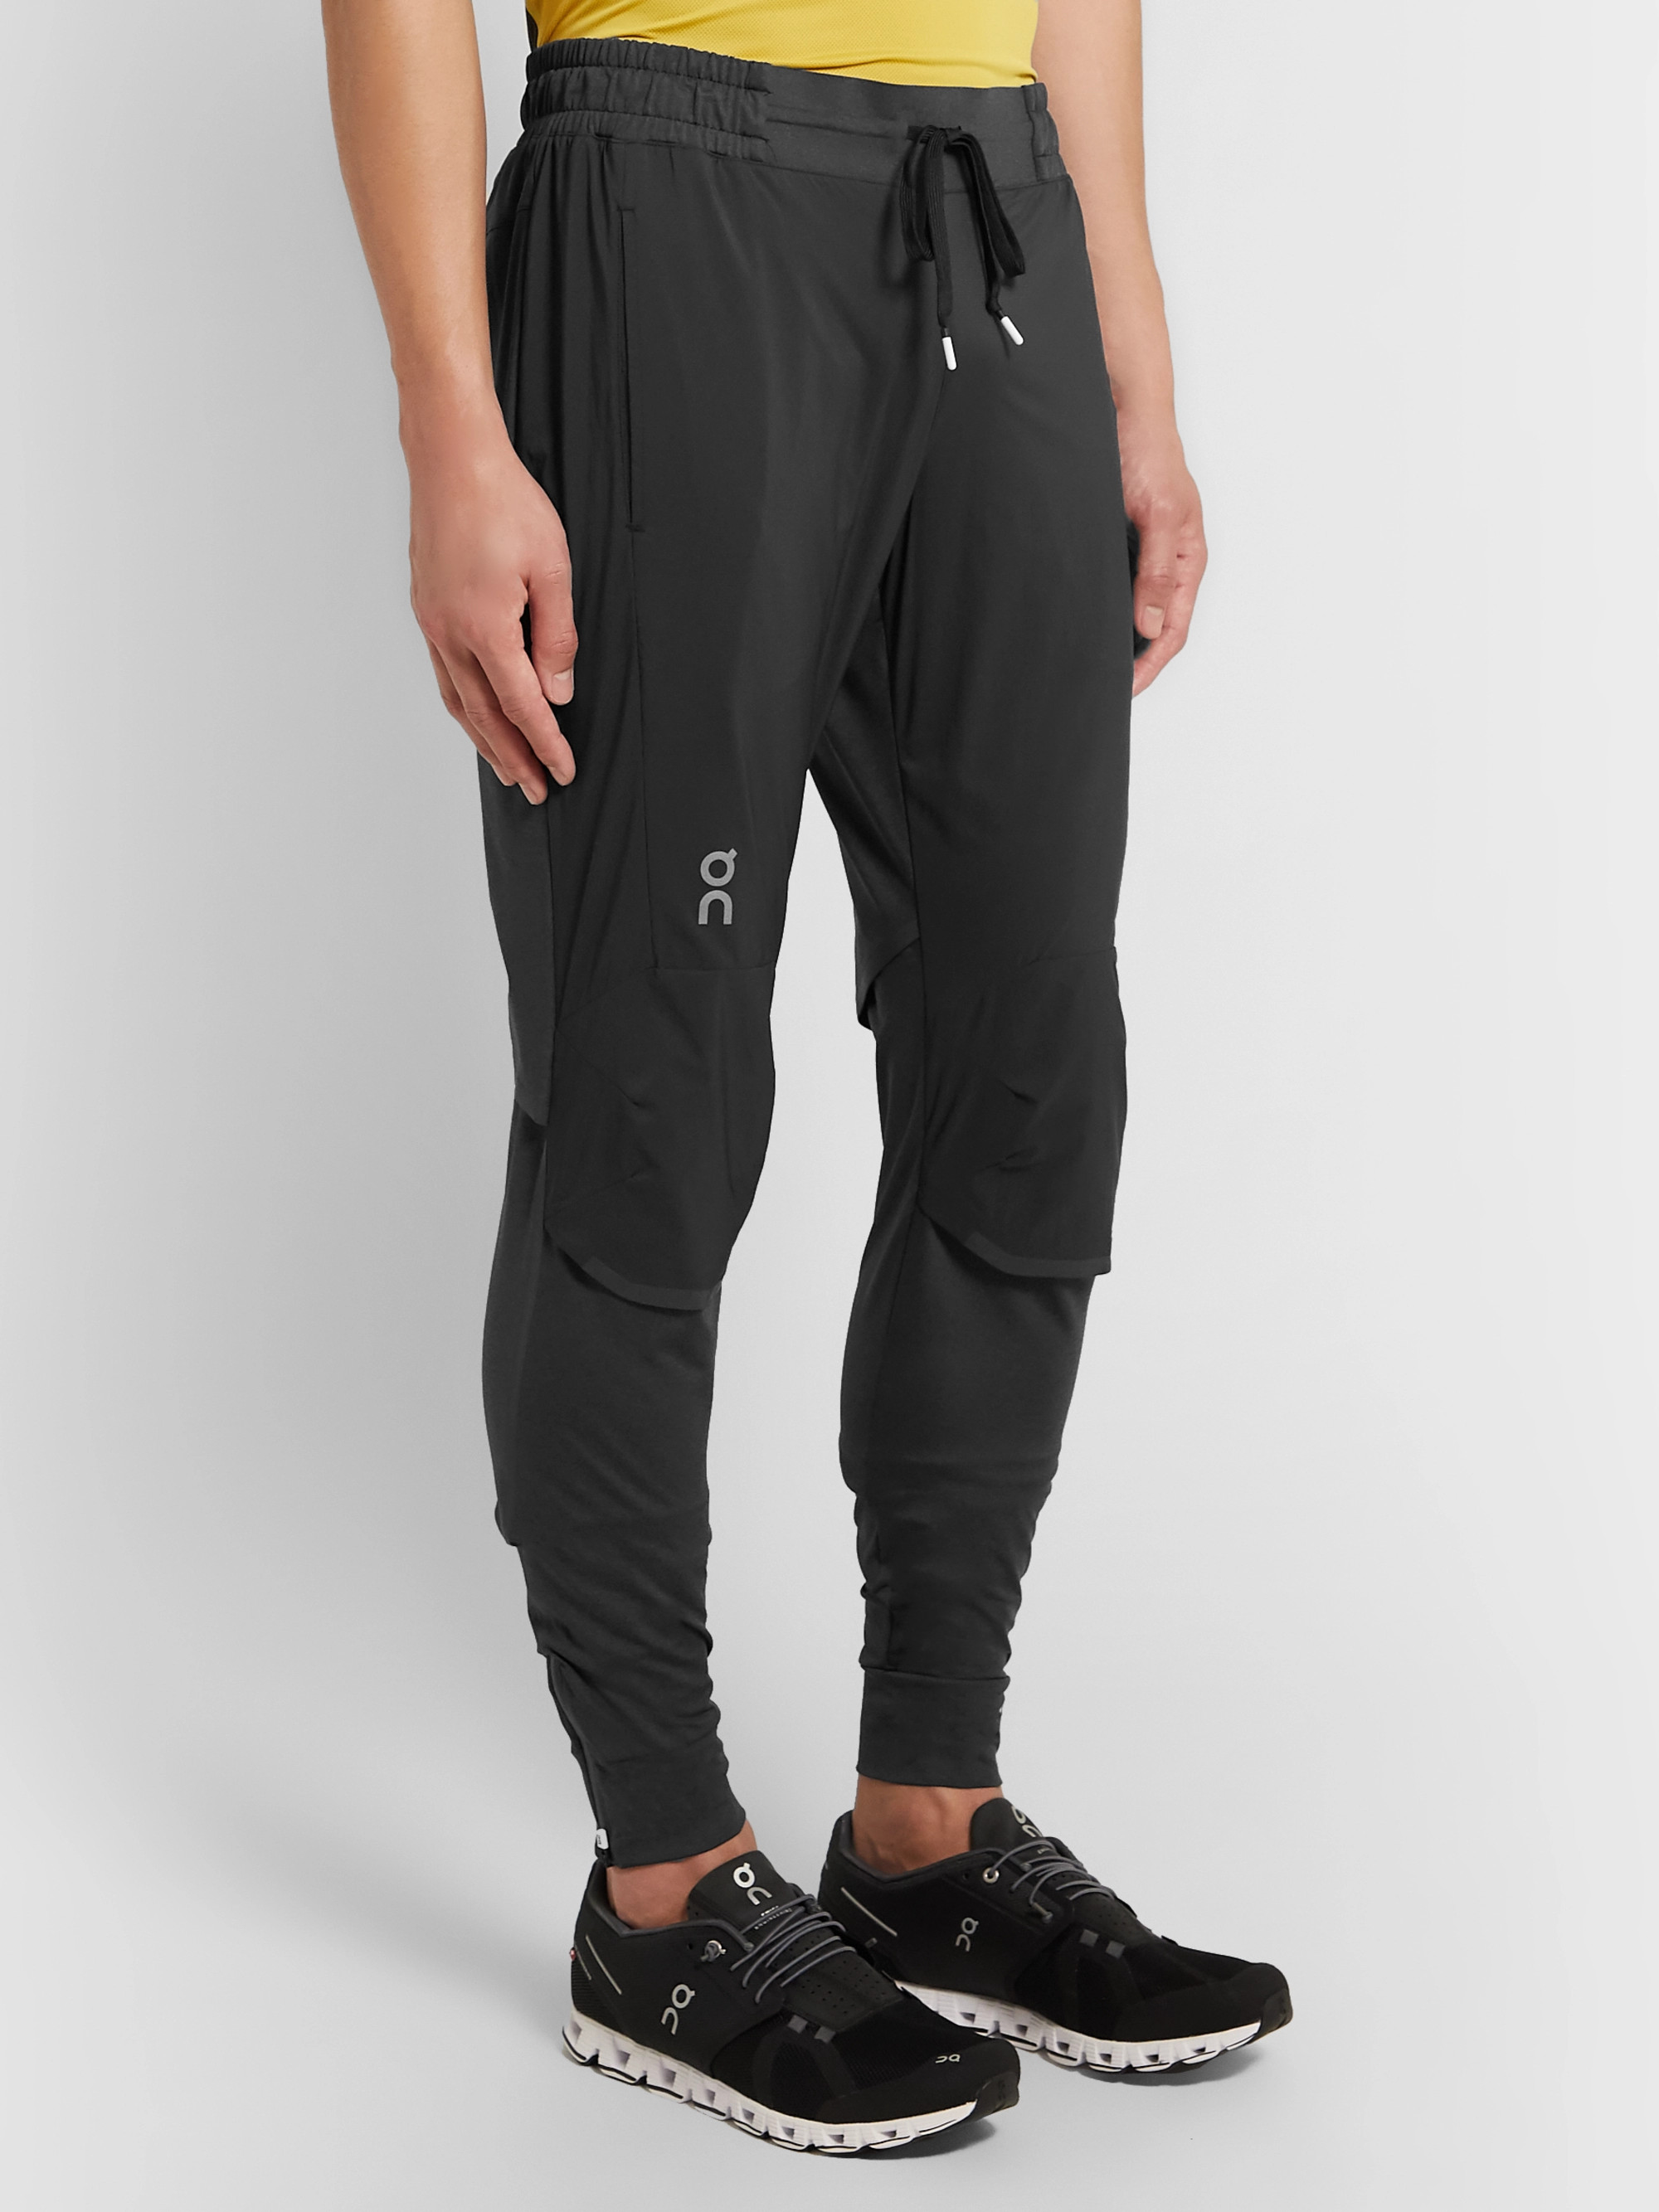 Tech-Jersey pants for men